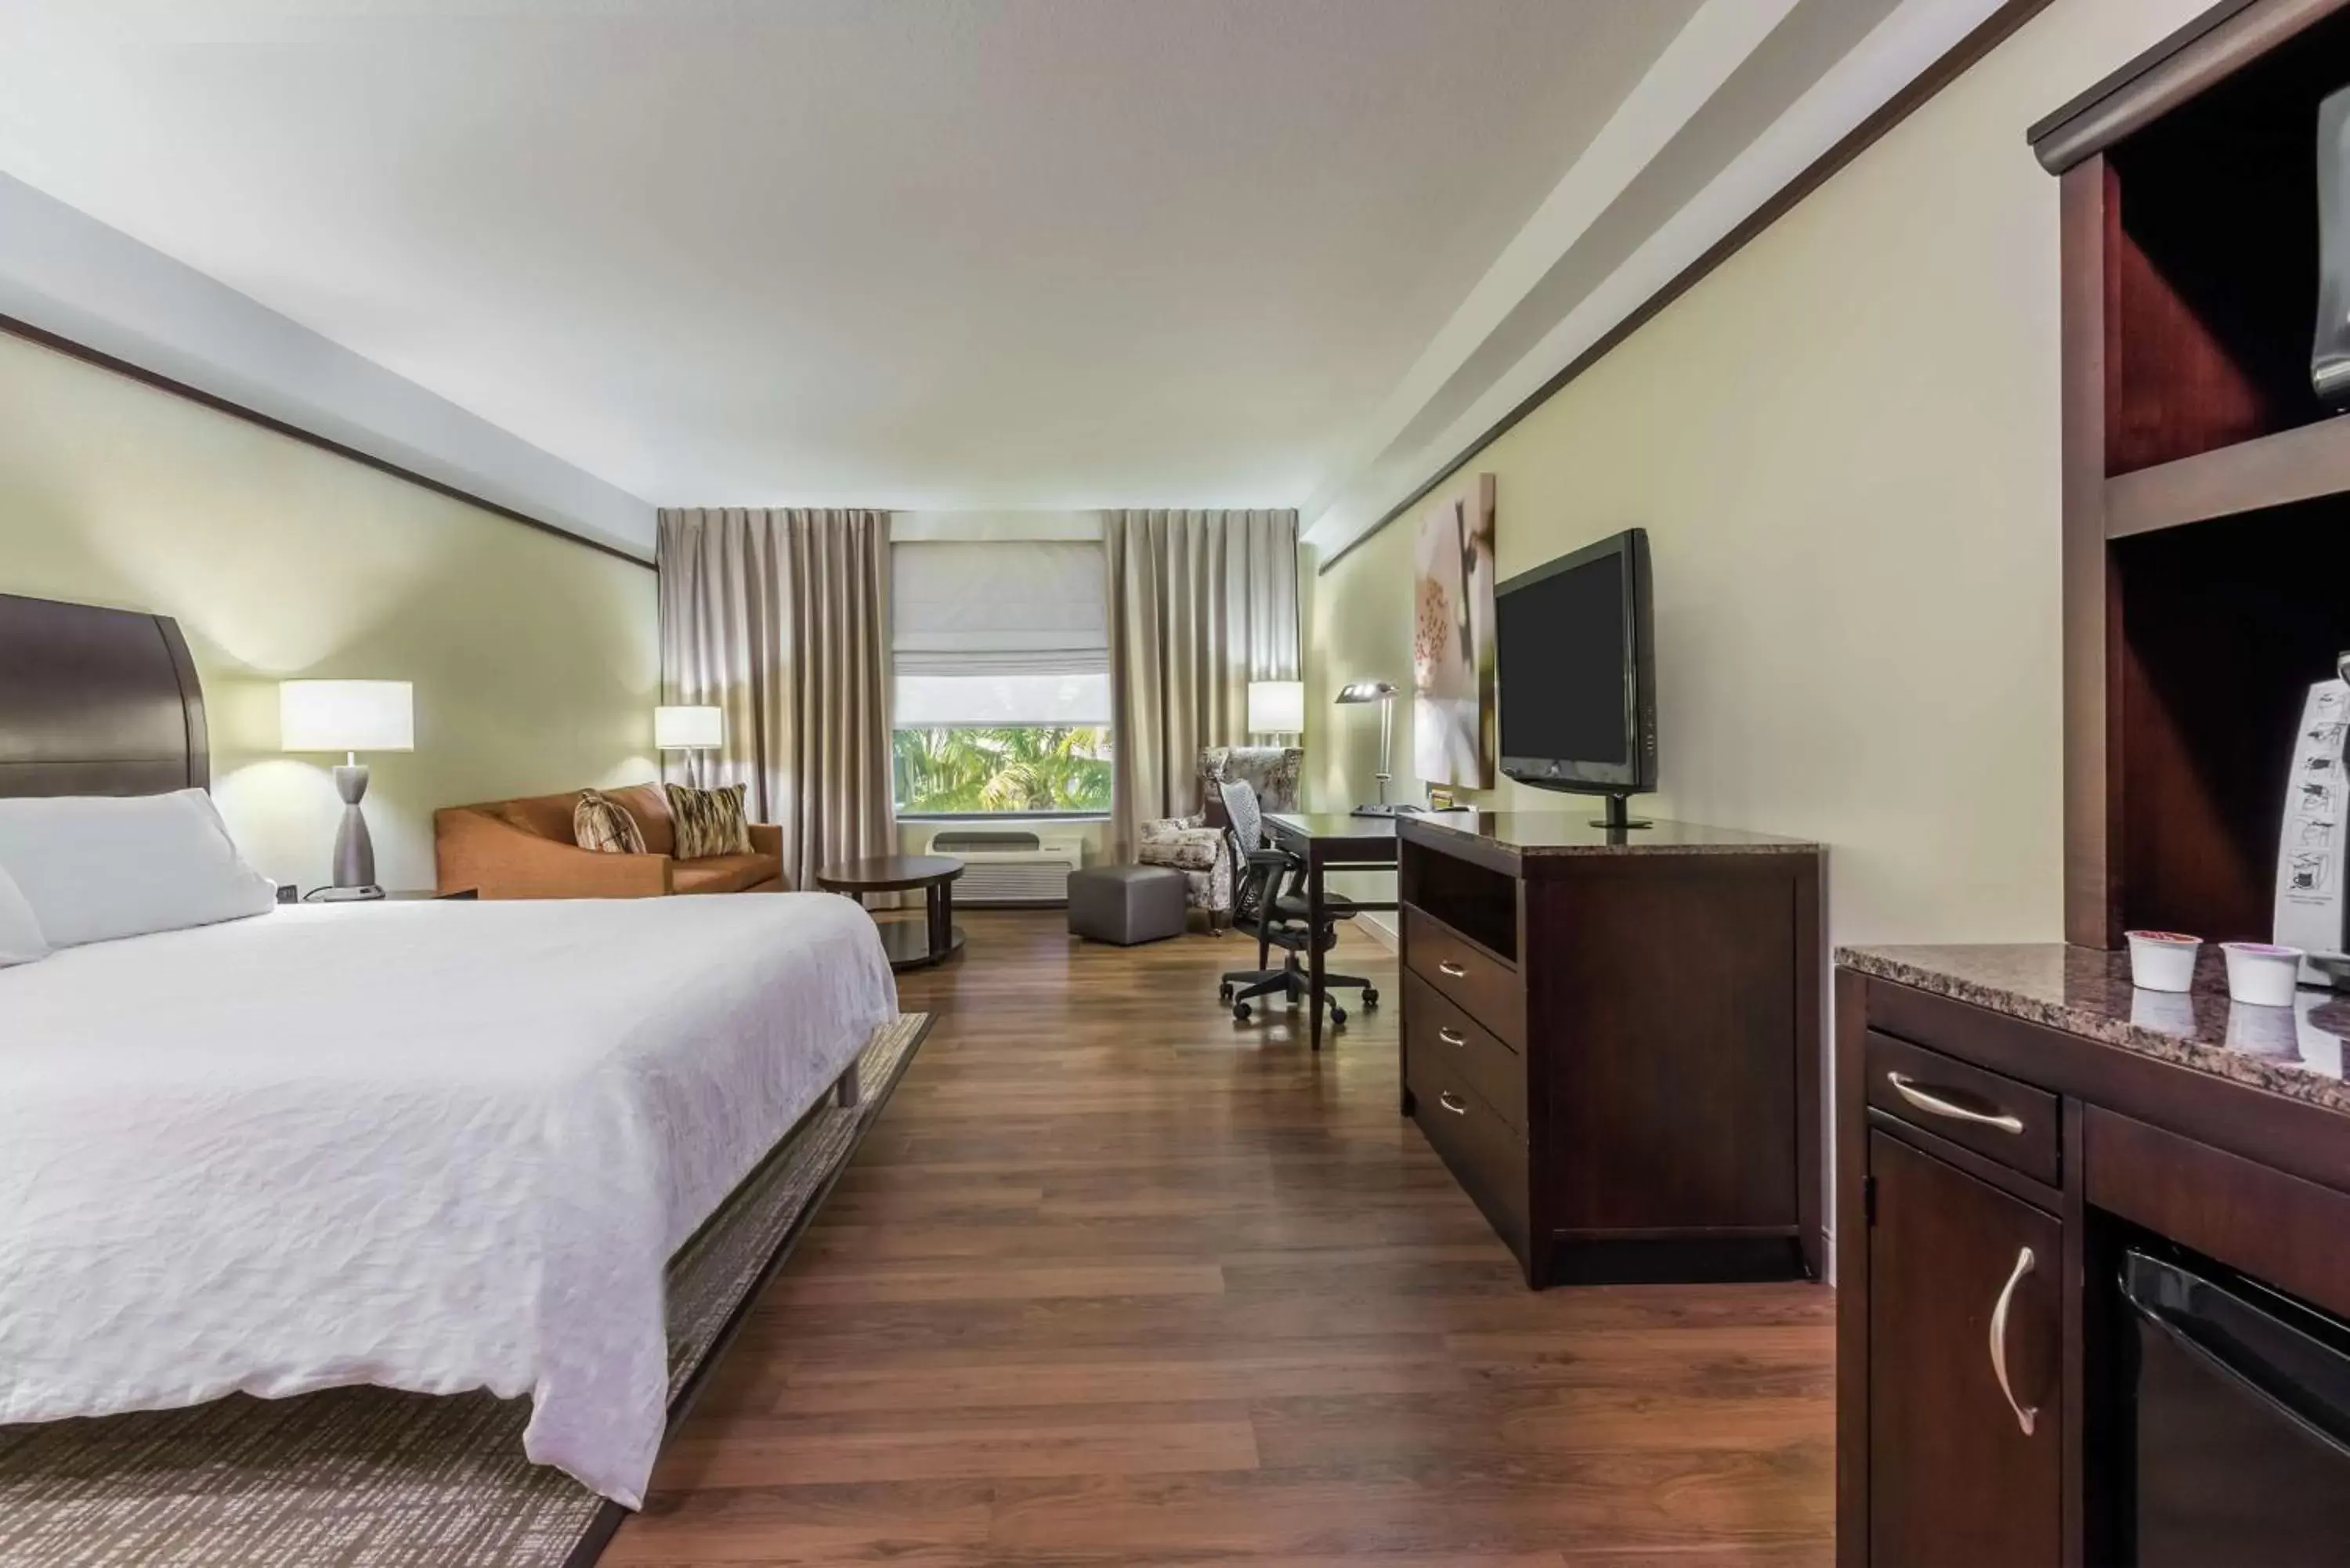 Premium King Room with Sofa Bed in Hilton Garden Inn West Palm Beach Airport